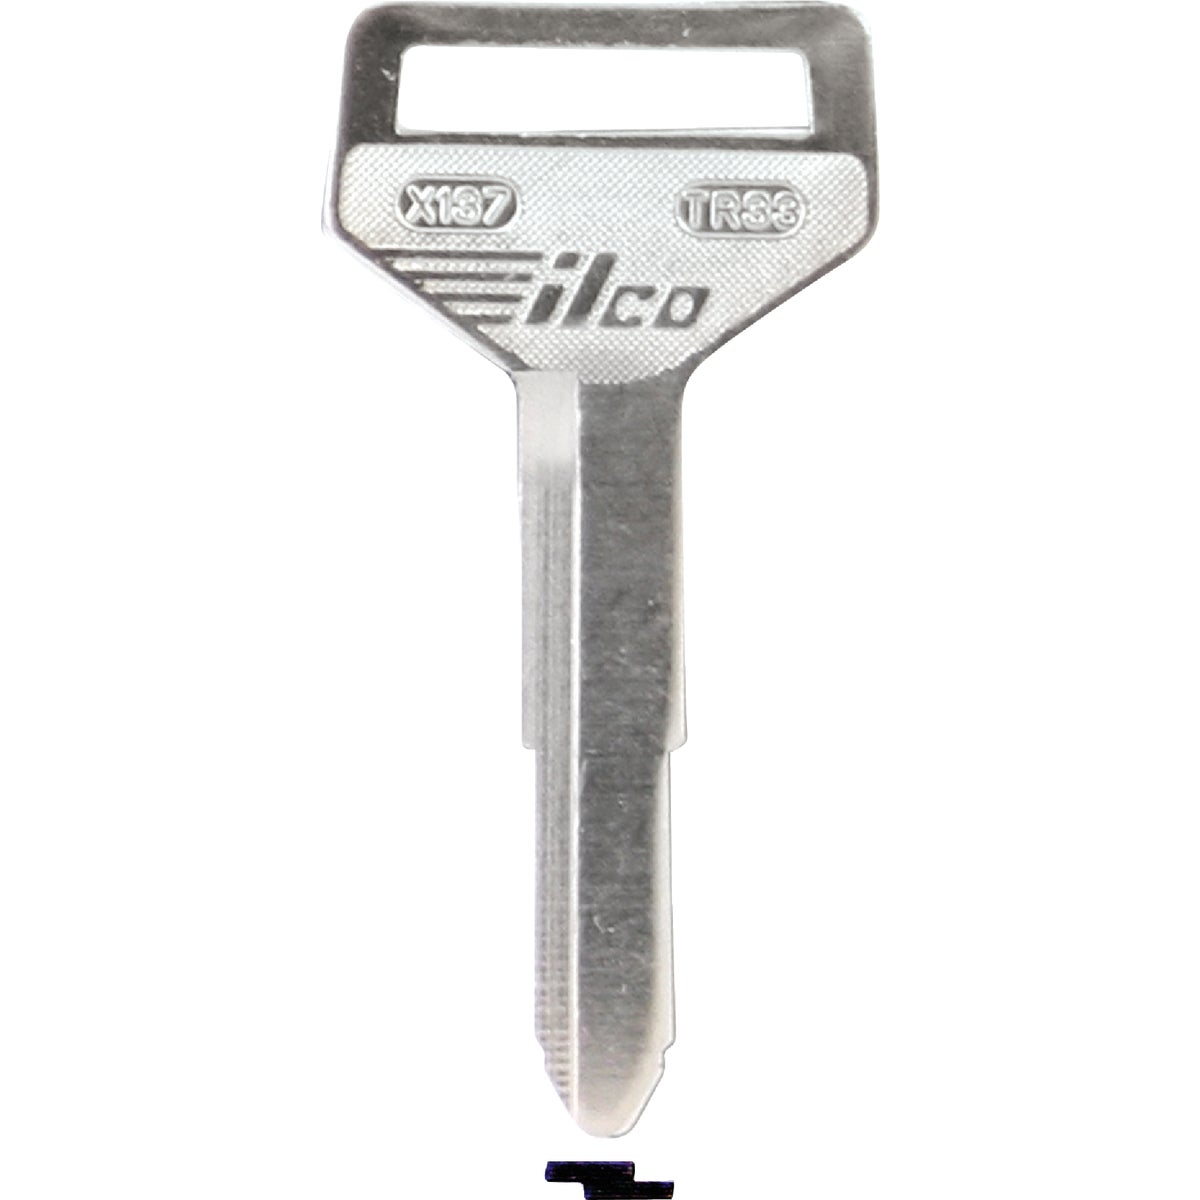 ILCO Toyota Nickel Plated Automotive Key, TR33 / X137 (10-Pack)